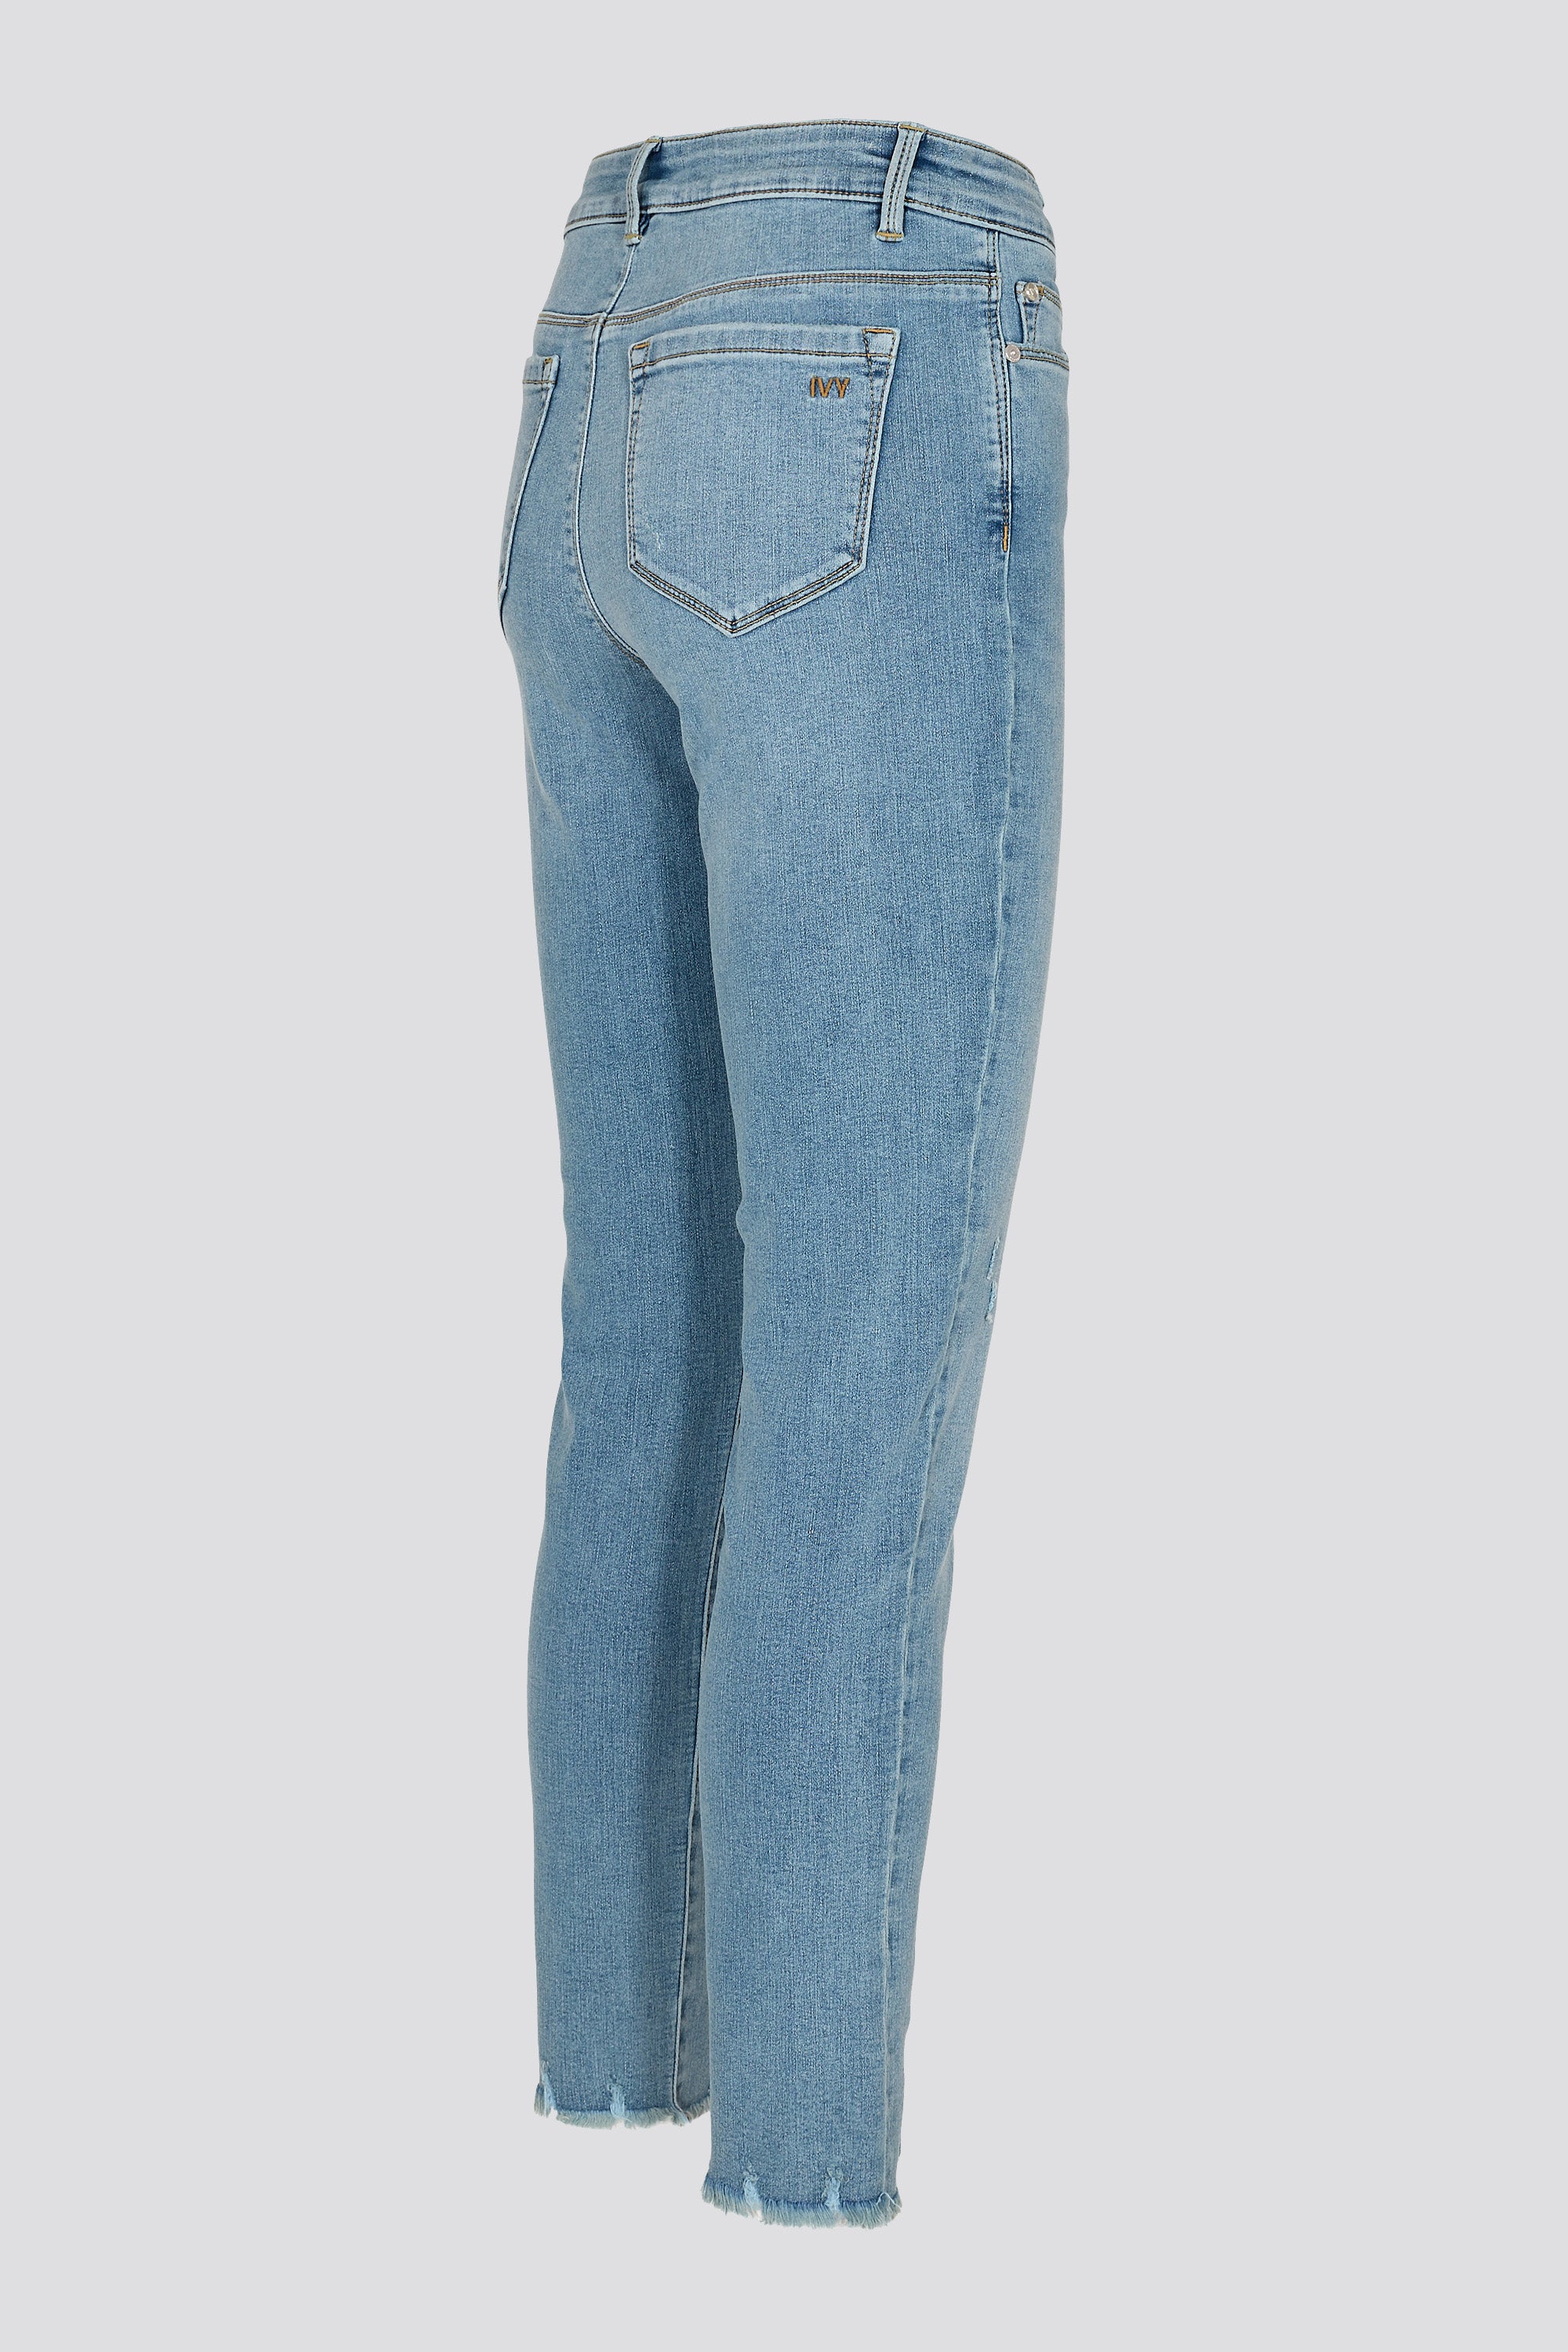 IVY Copenhagen IVY-Alexa Jeans Wash Bright Cool Original Denim Jeans & Pants 51 Denim Blue